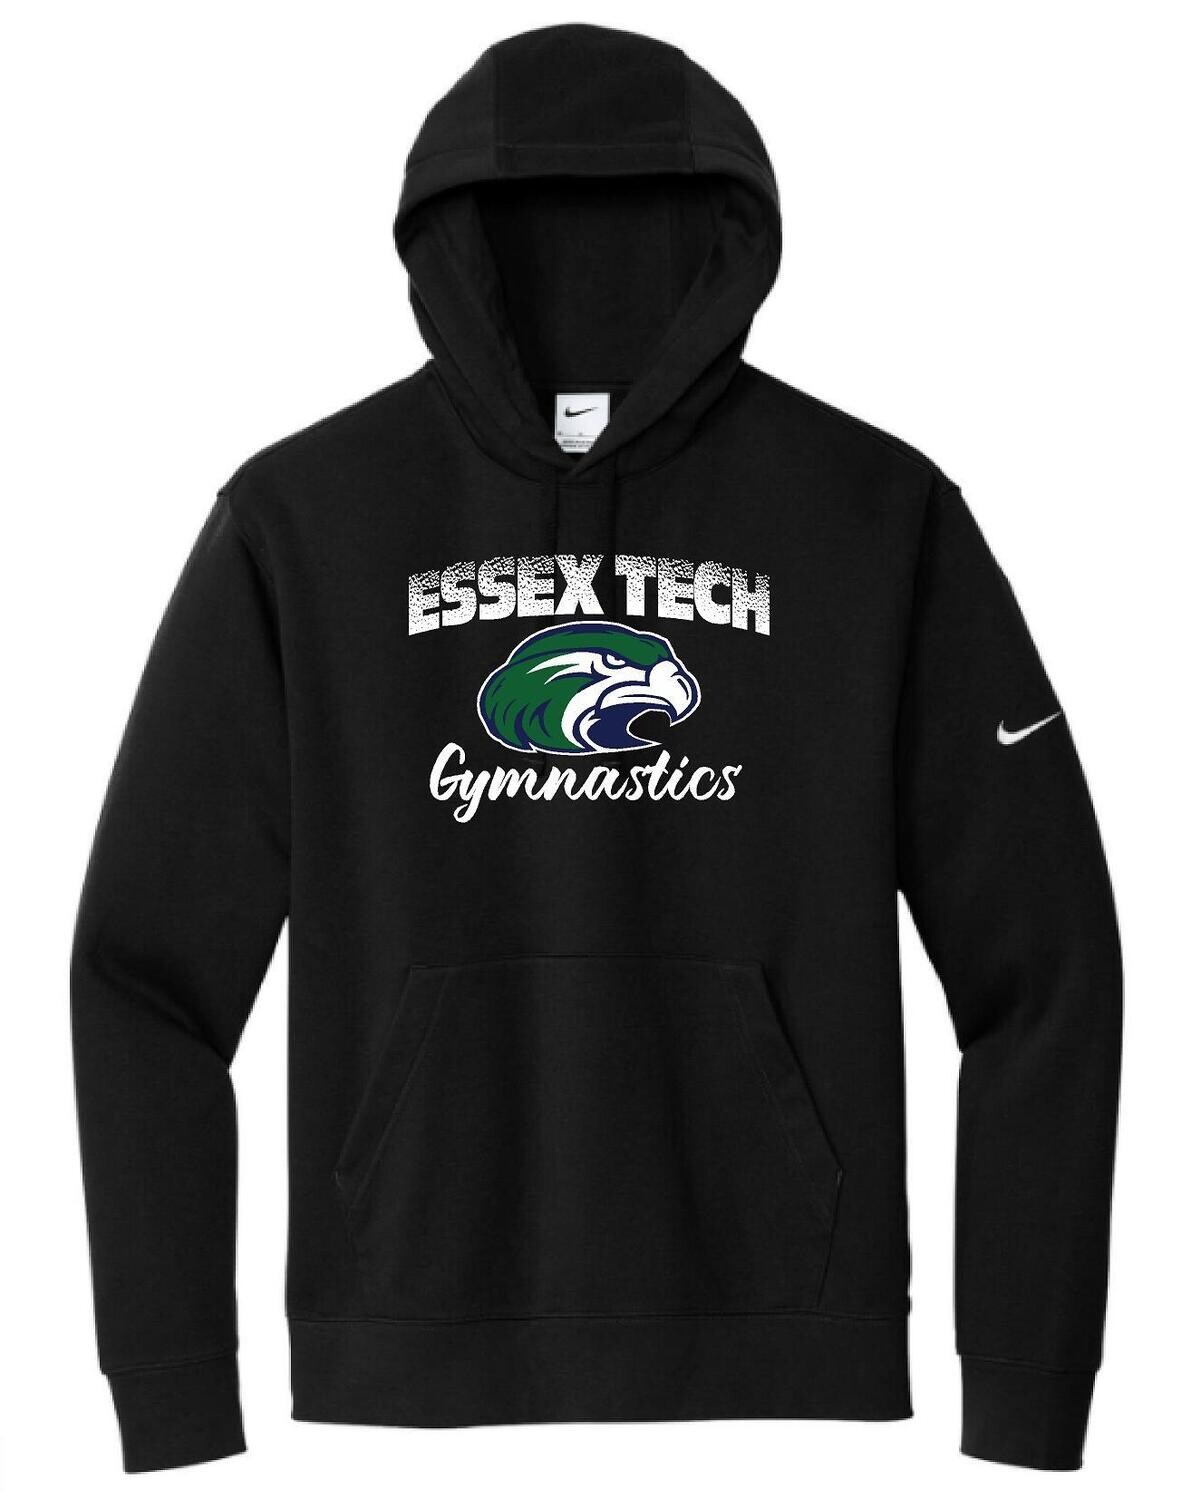 Nike Brand Essex Tech Gymnastics Hooded Sweatshirt